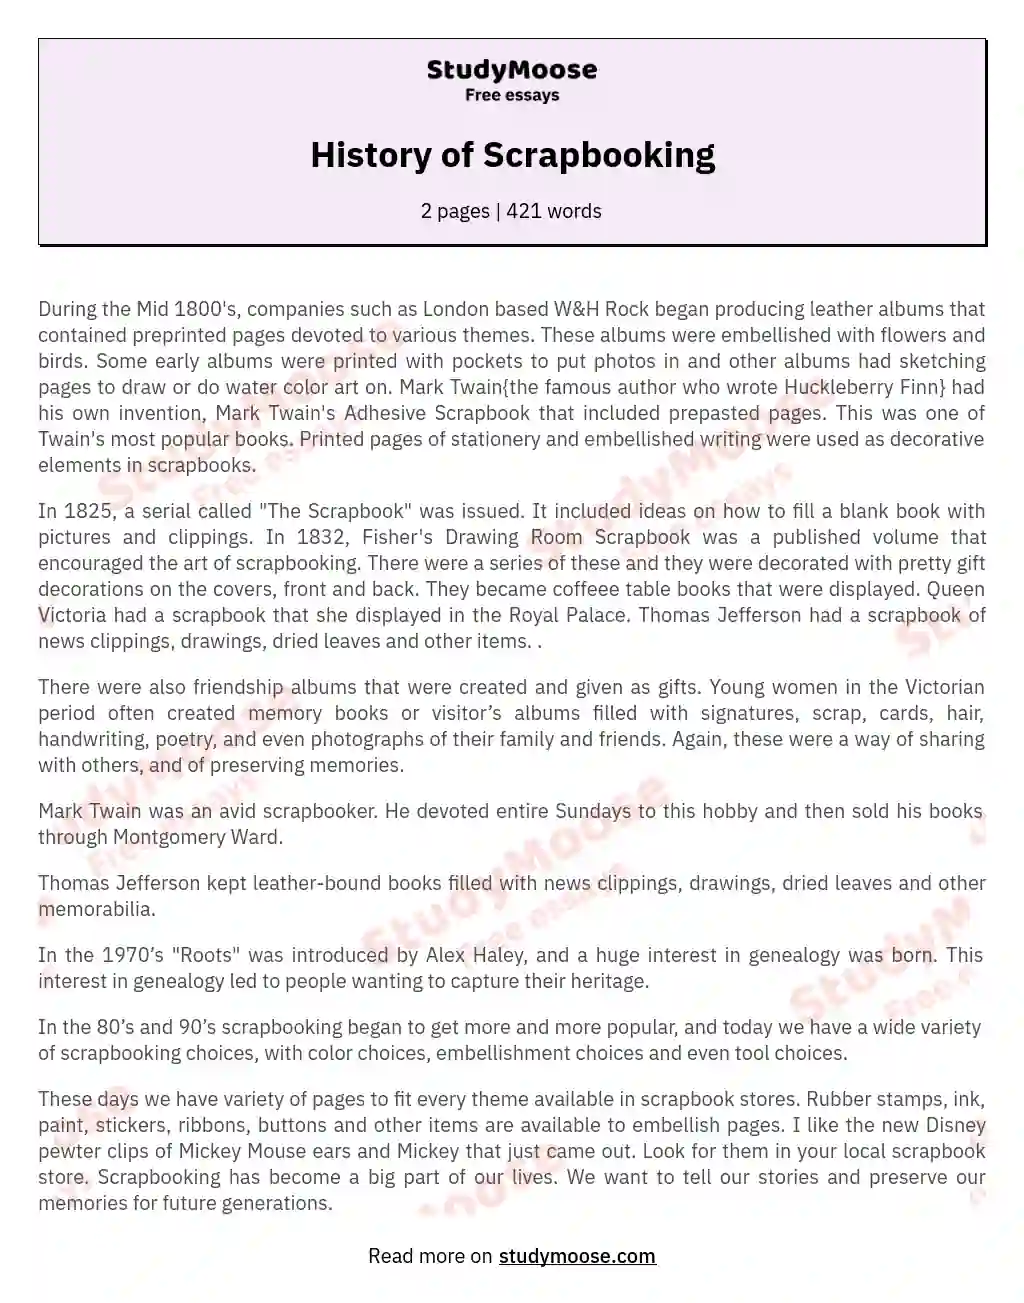 History of Scrapbooking essay